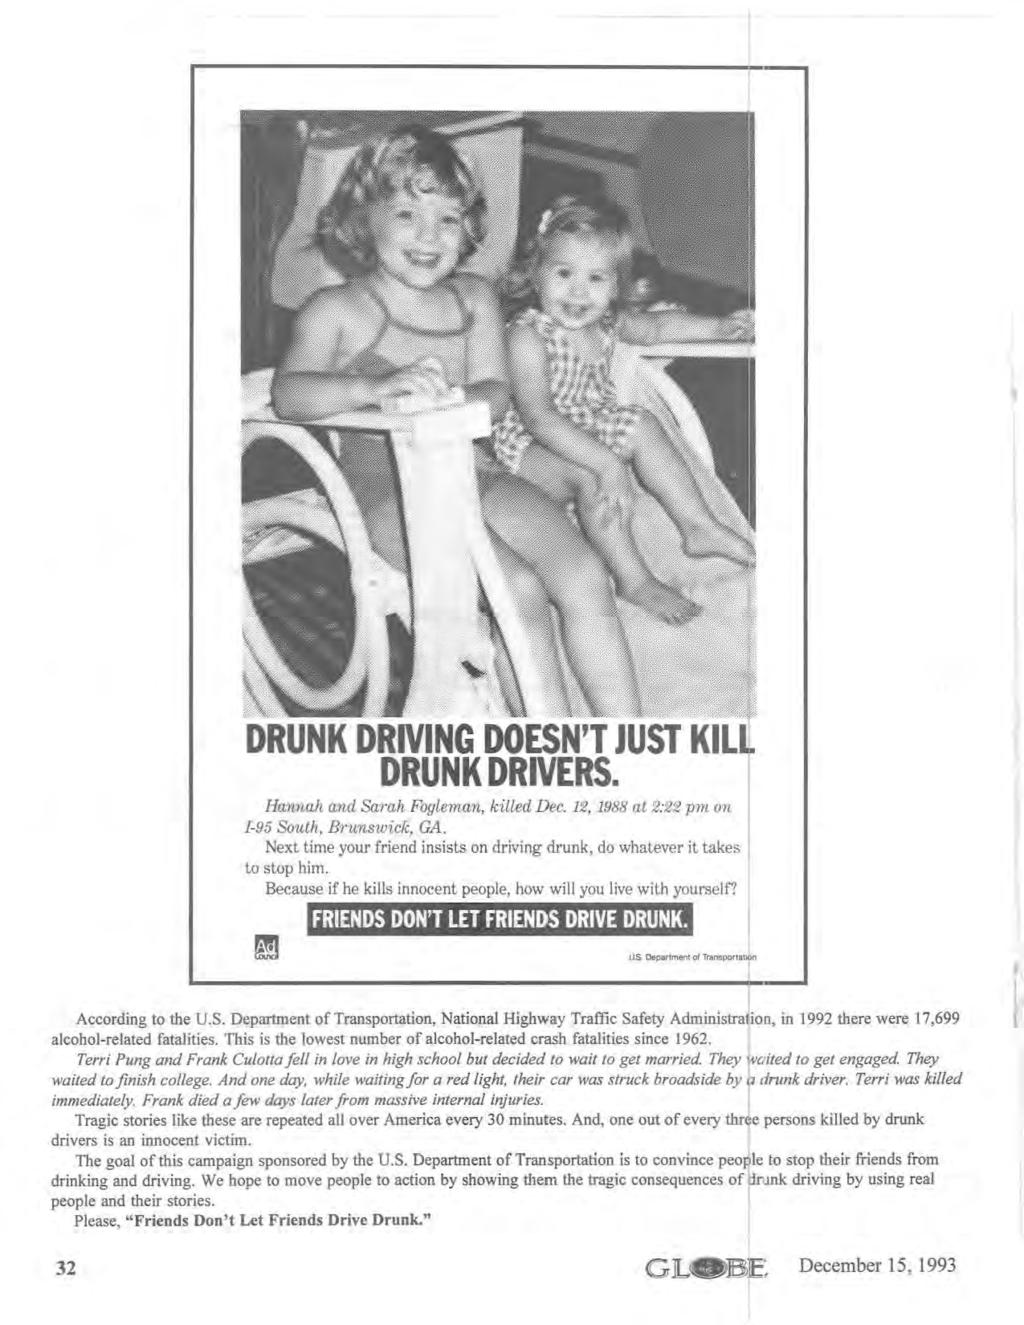 , t ~ DRUNK DRIVING DOESN'T JUST DRUNK DRIVERS. Hannah and Sarah Fogleman, killed Dec. 12, 1988 at 2:22 pm on /-95 South, Brunswick, GA.